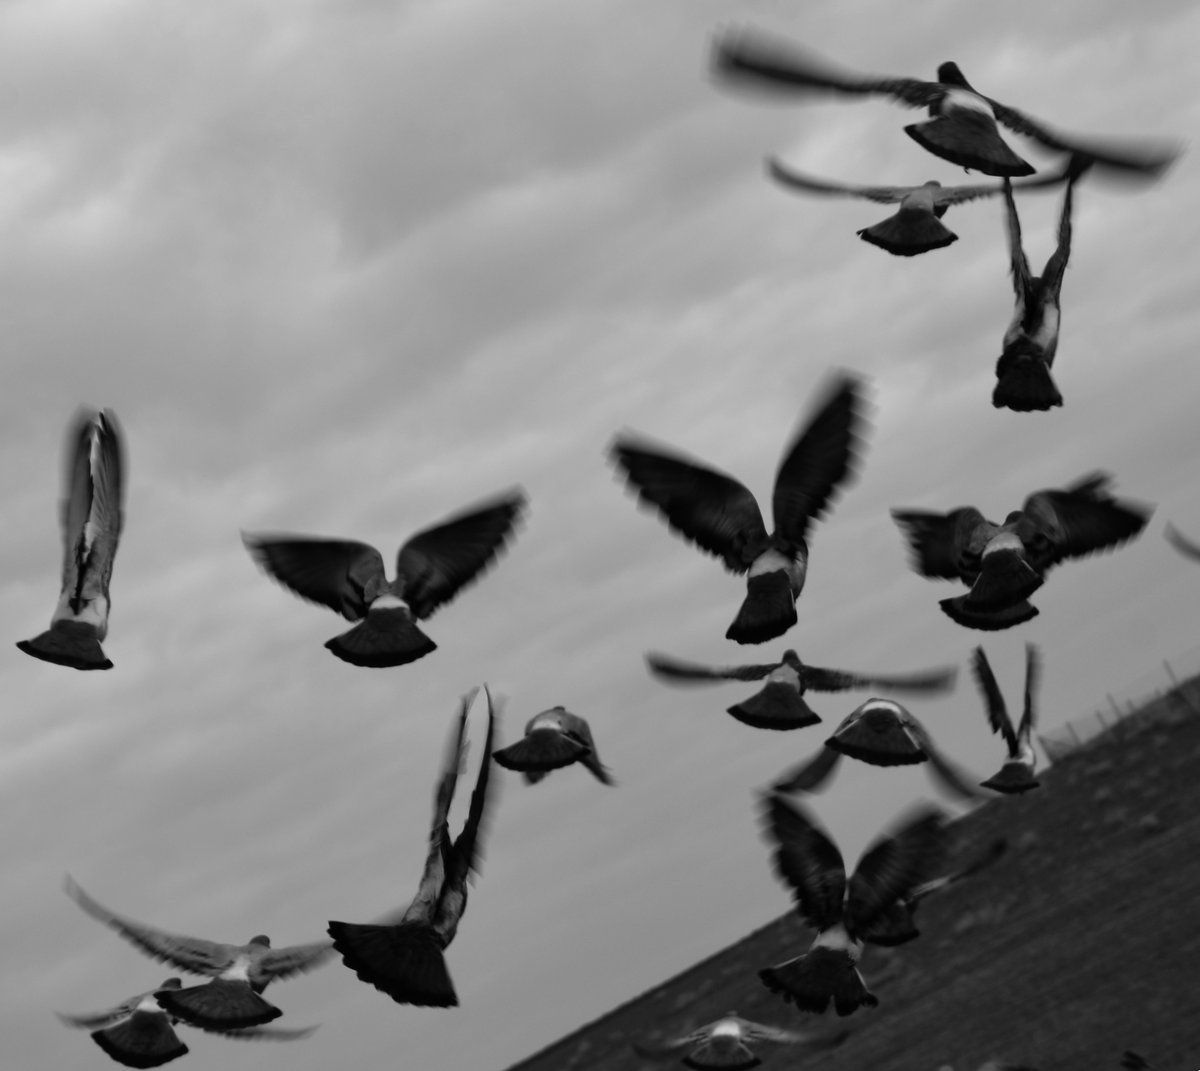 Insta: instagram.com/myartsypieces/

#pigeons #birds #nature #photography #photographer #myartsypieces #blackandwhite #b&w #blackandwhitephotography #art #ilovephotography #photooftheday #artphotography #artphoto #artphotographer #bestphoto